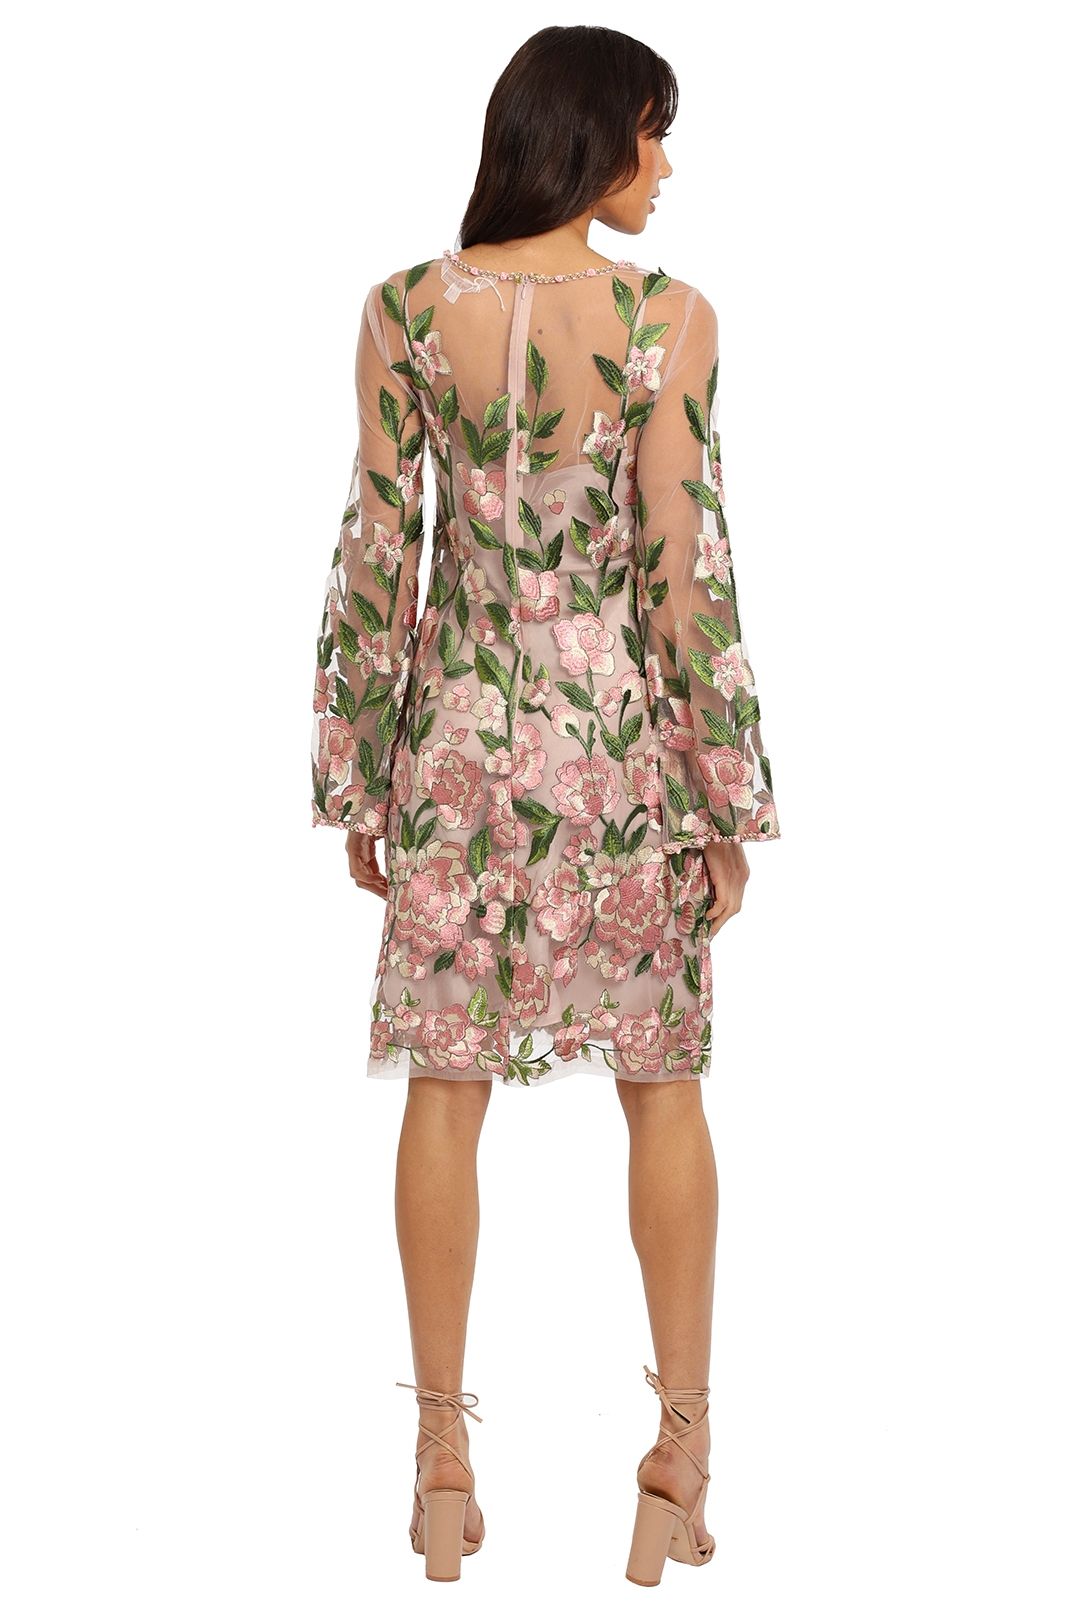 Trelise Cooper - Blush Embroidered Midi Floral 